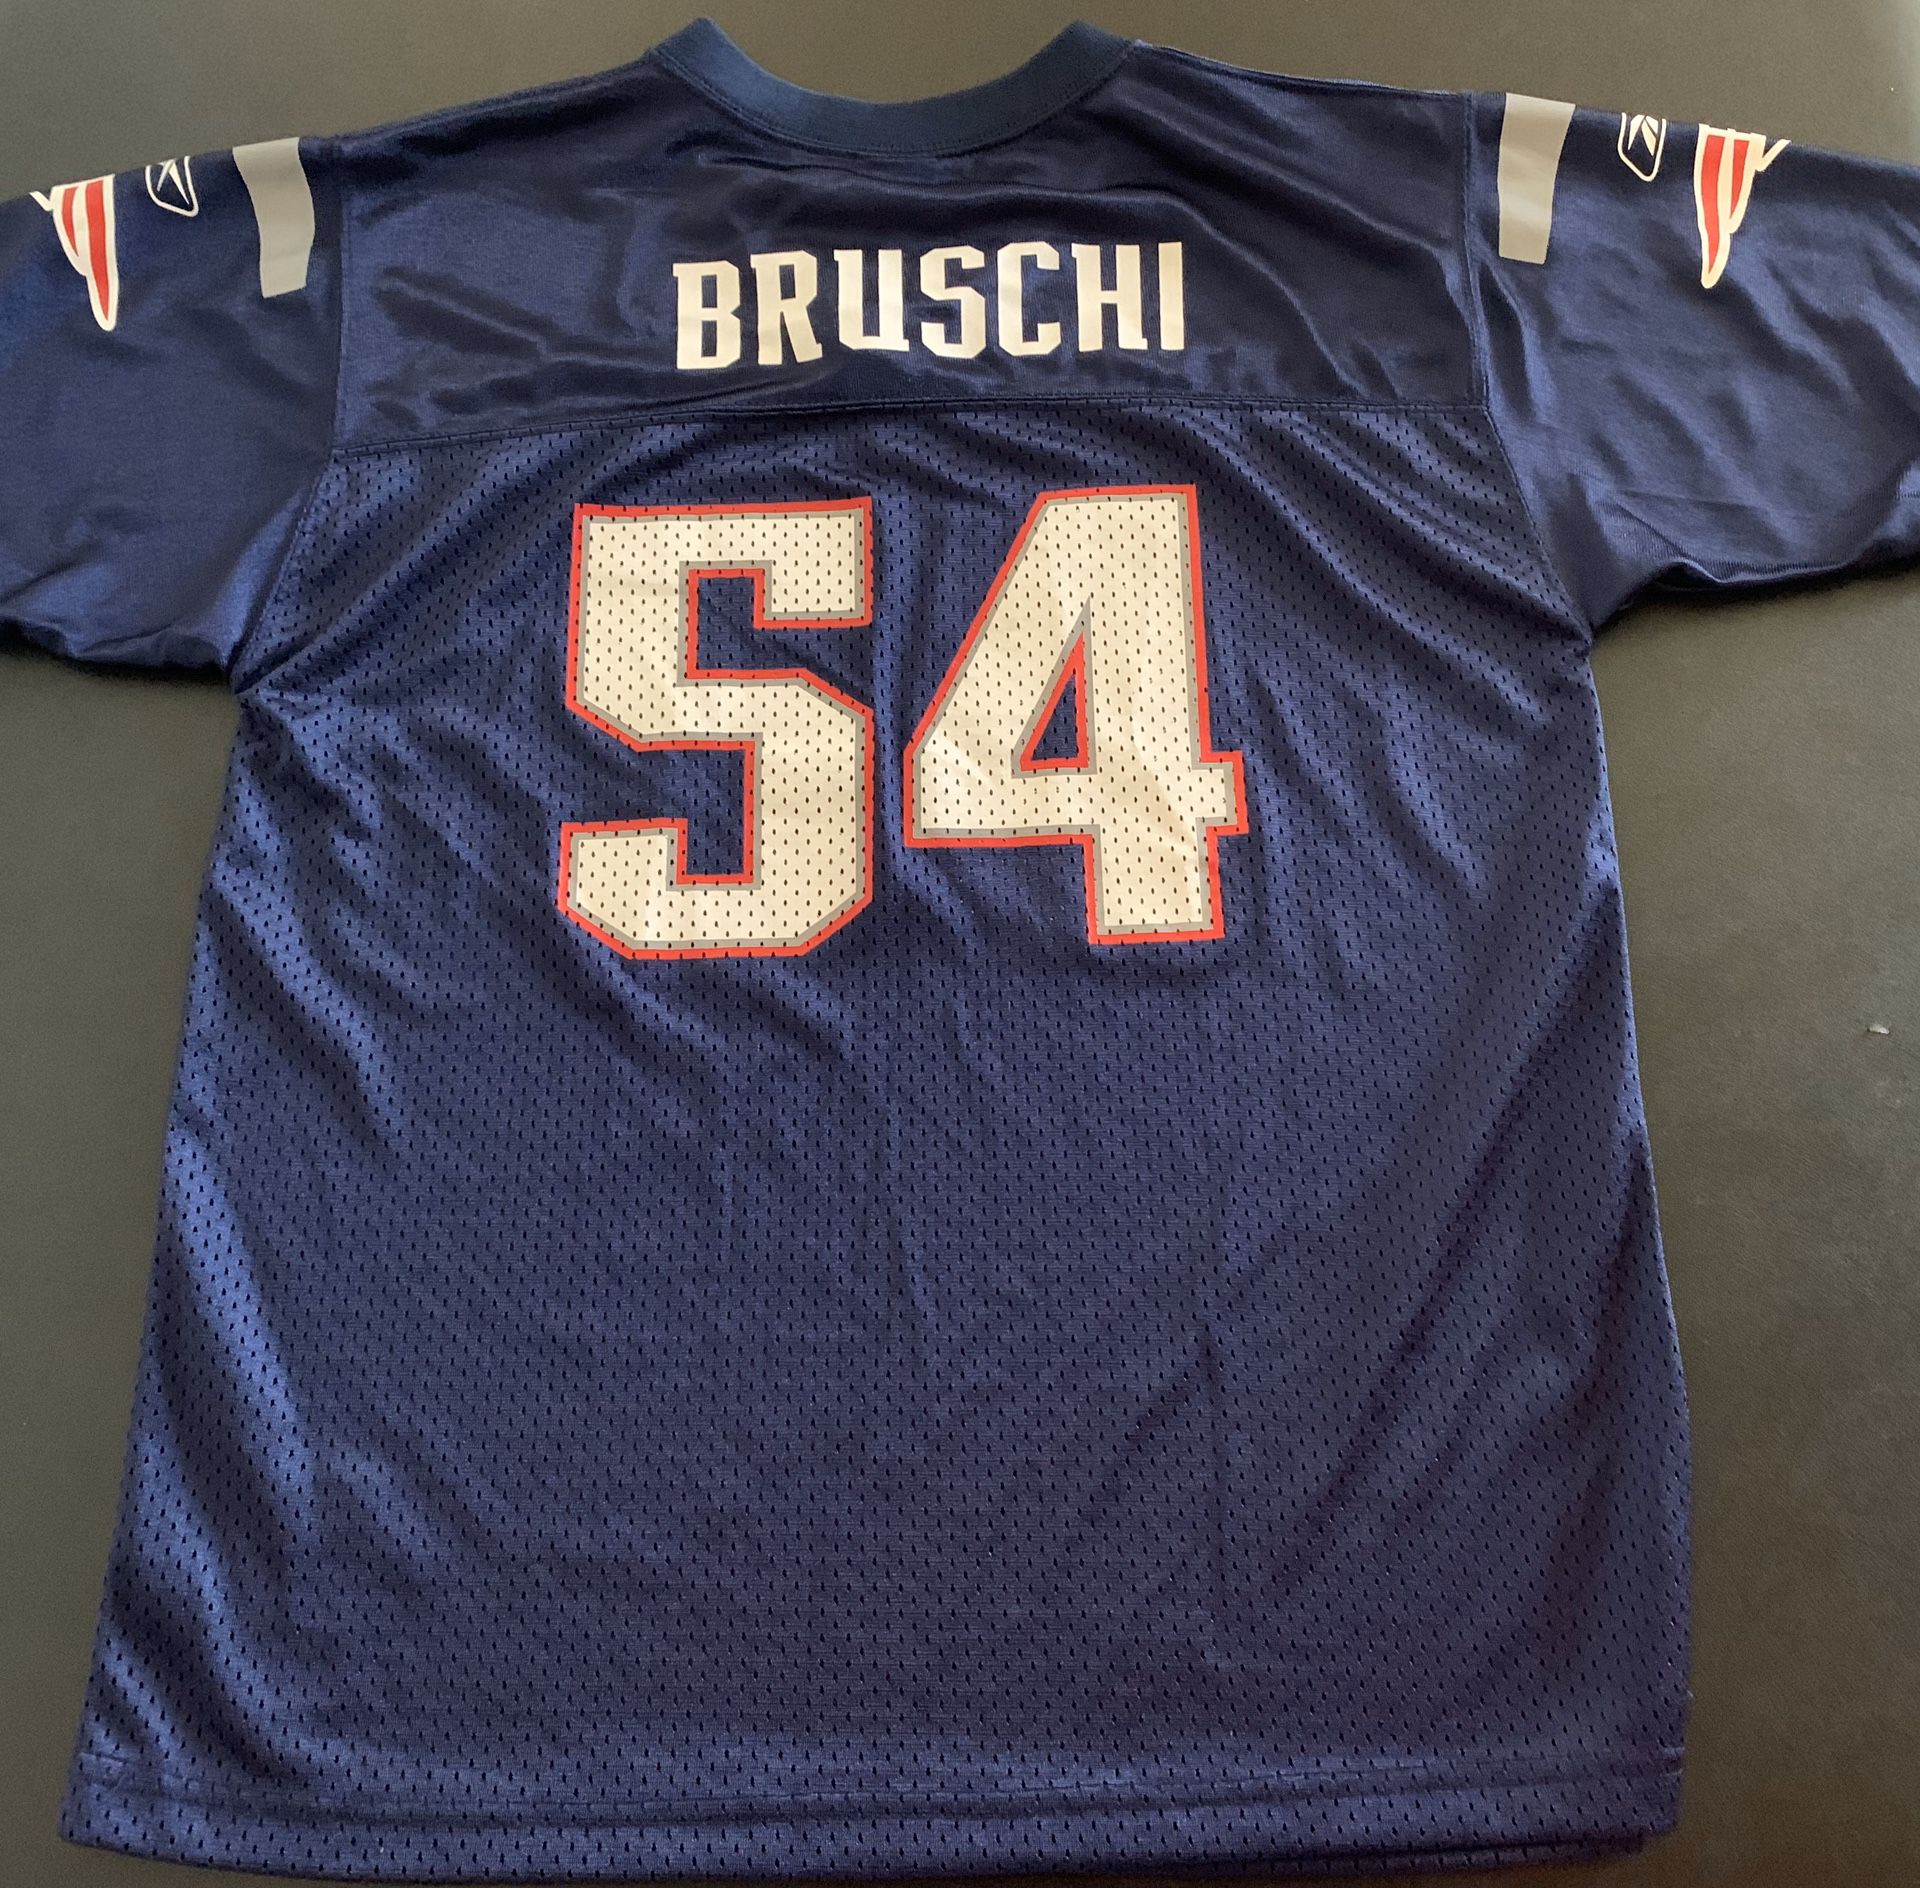 Tedy Bruschi New England Patriots NFL Reebok Jersey - Kids Youth Size XL (18/20)